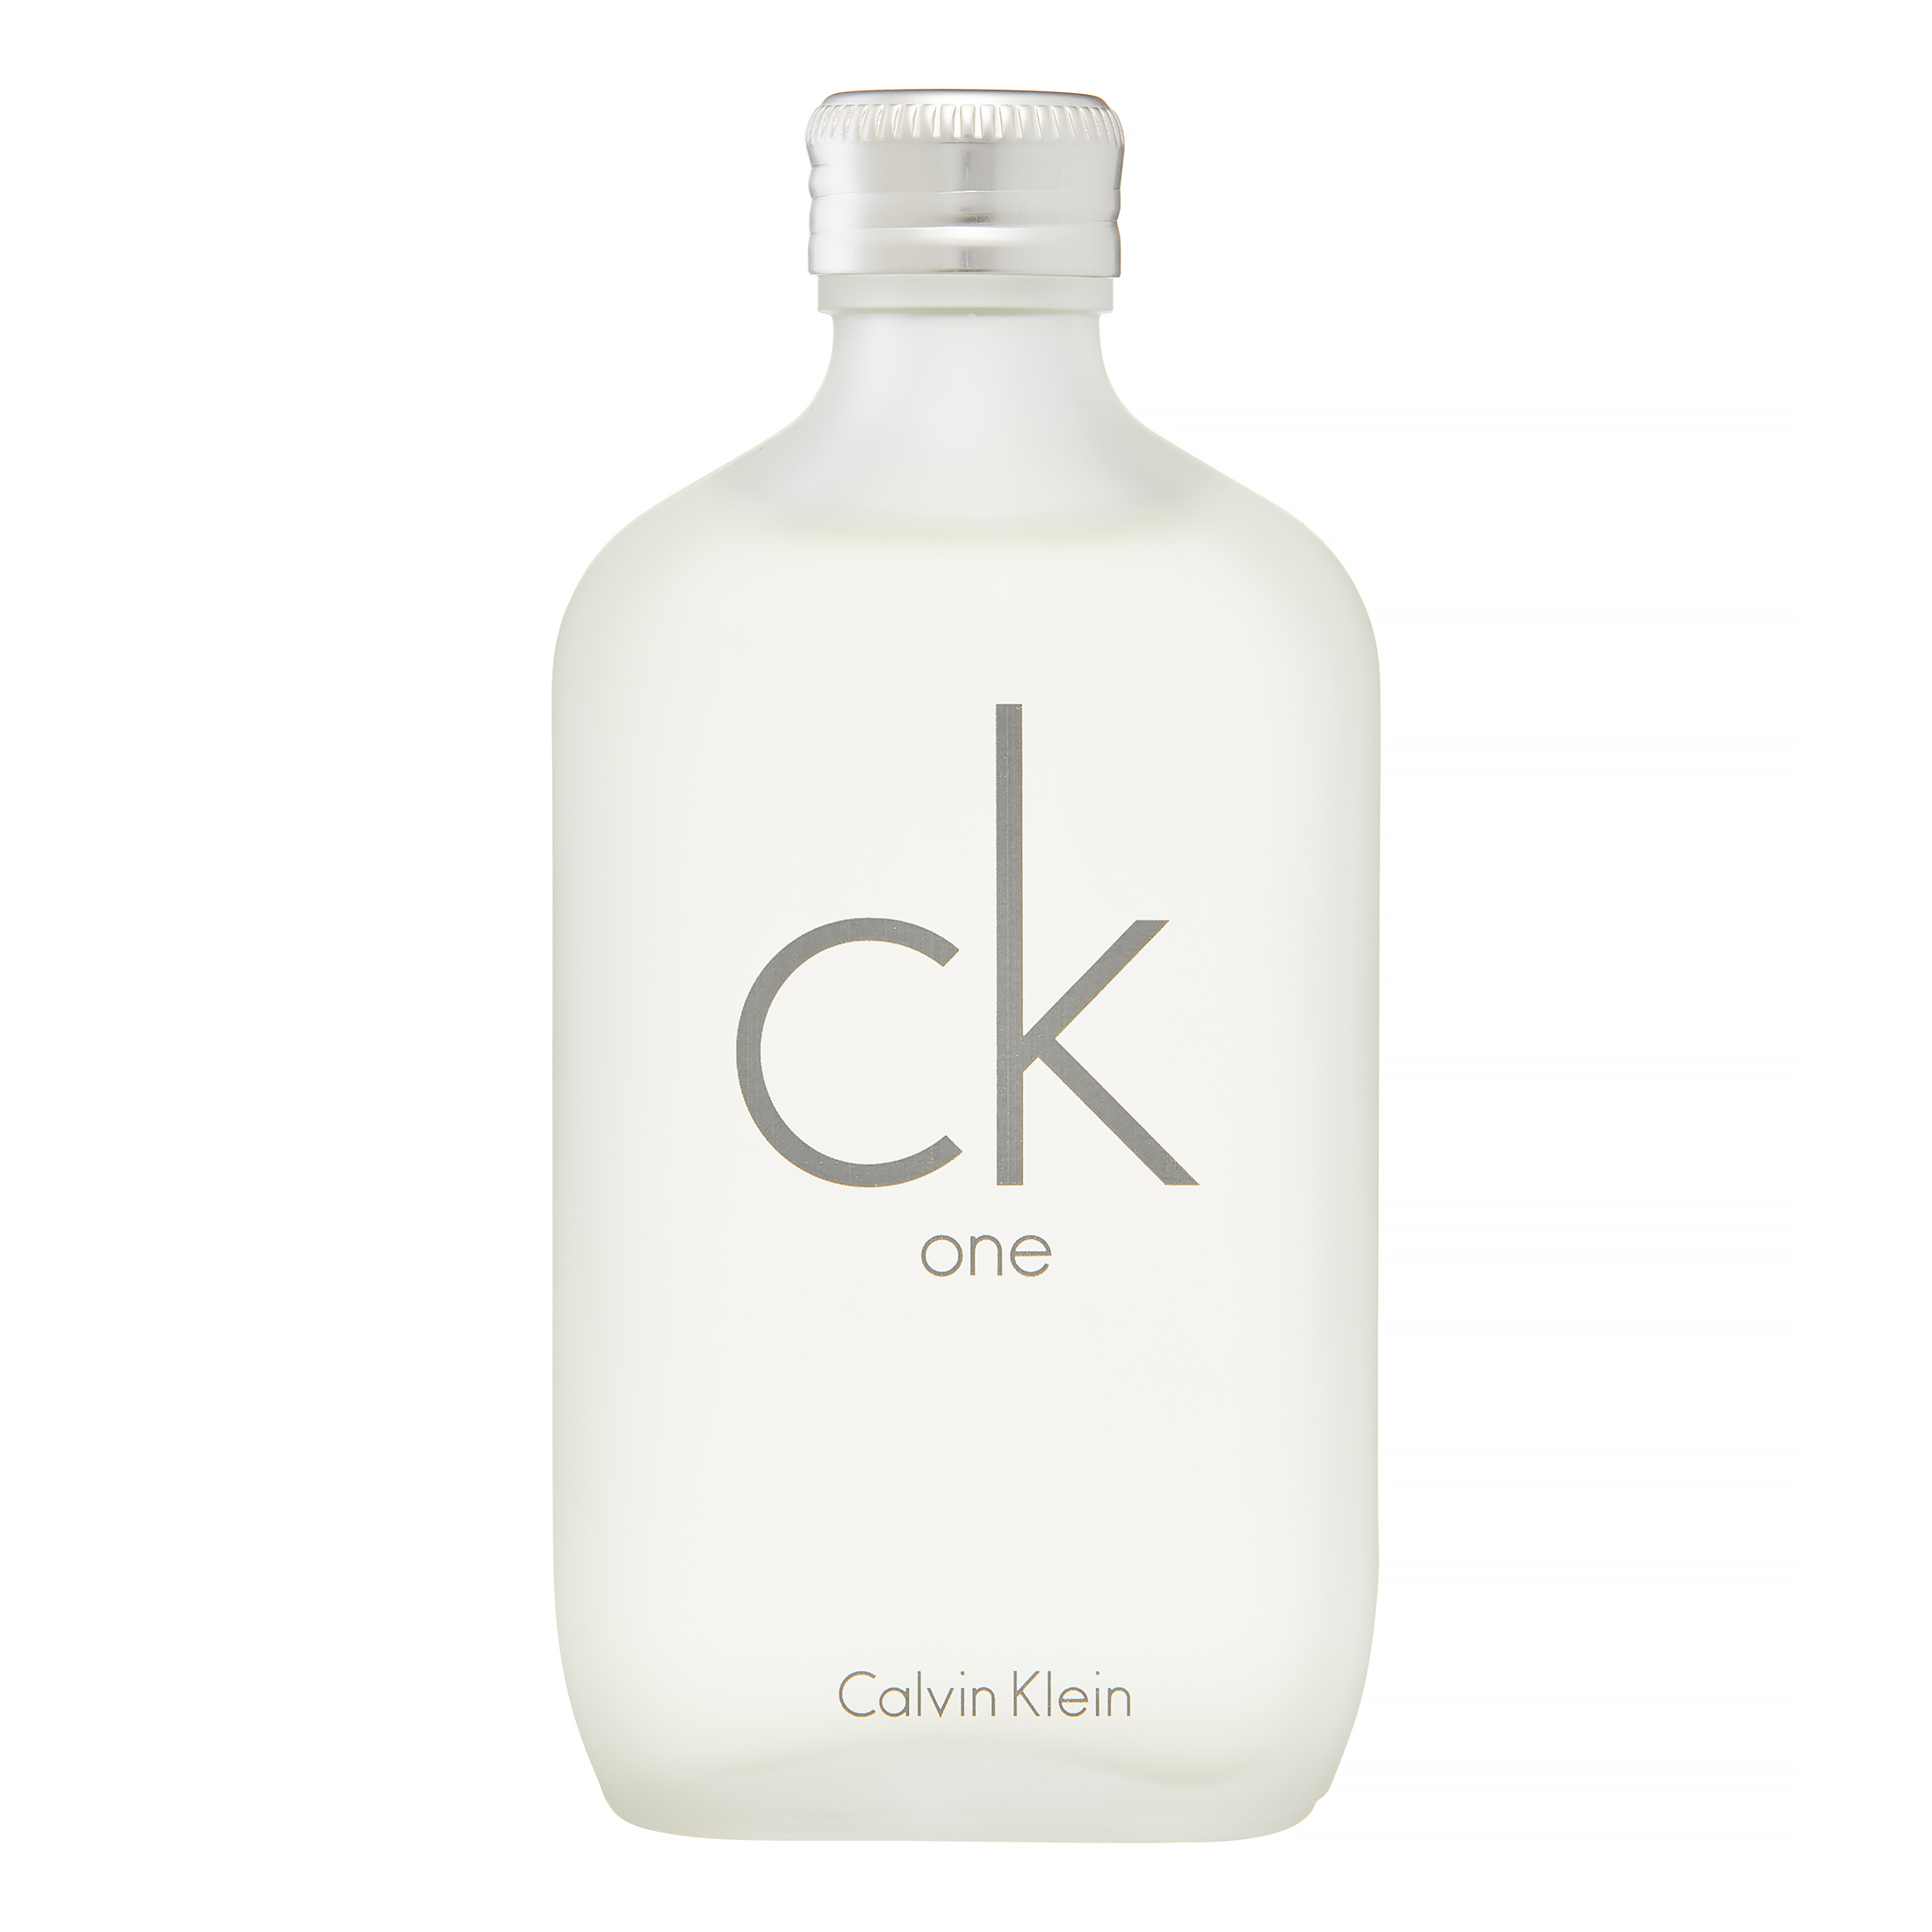 Calvin Klein Ck One Eau De Toilette Spray, Unisex Perfume, 3.4 Oz - image 1 of 8